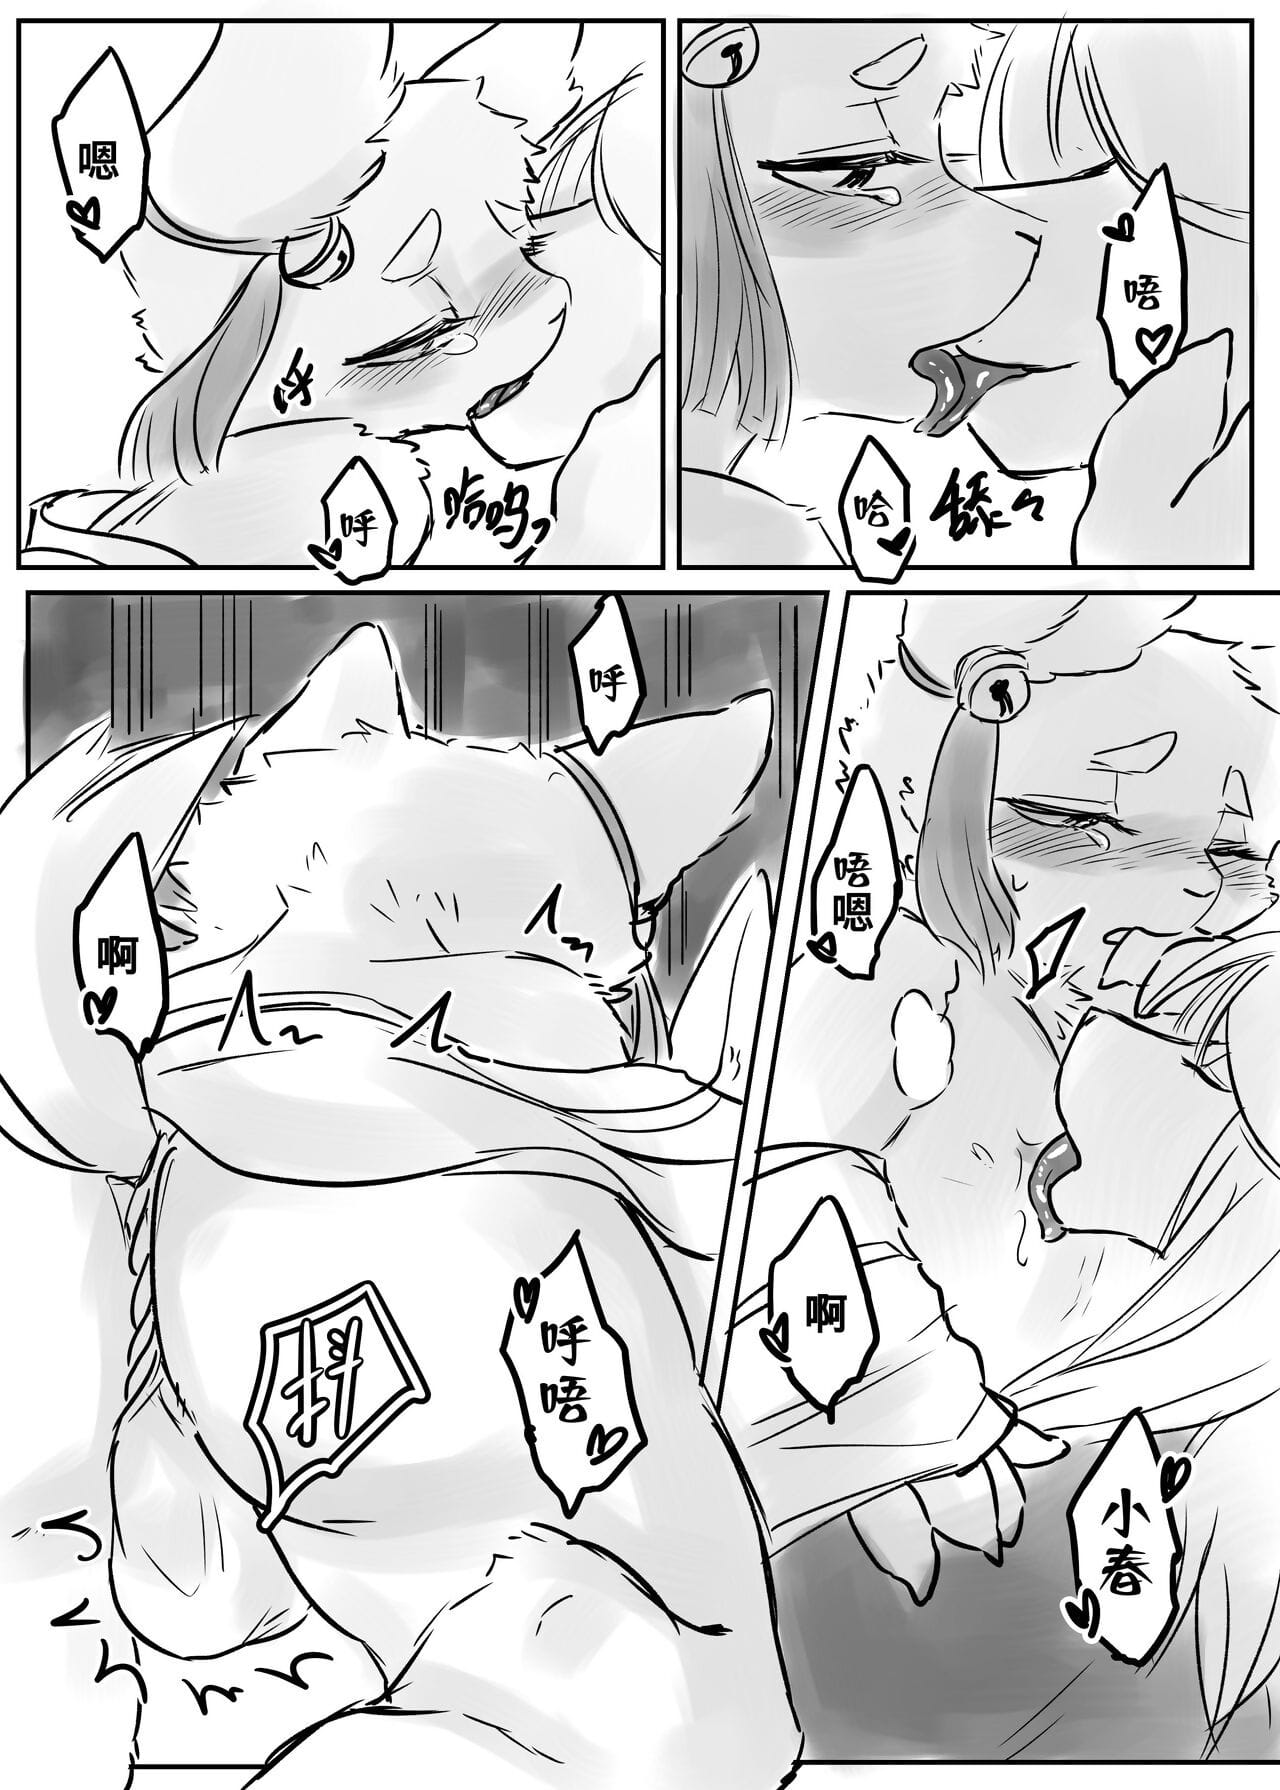 （the ziyaretçi 他乡之人 by：鬼流 PART 3 page 1